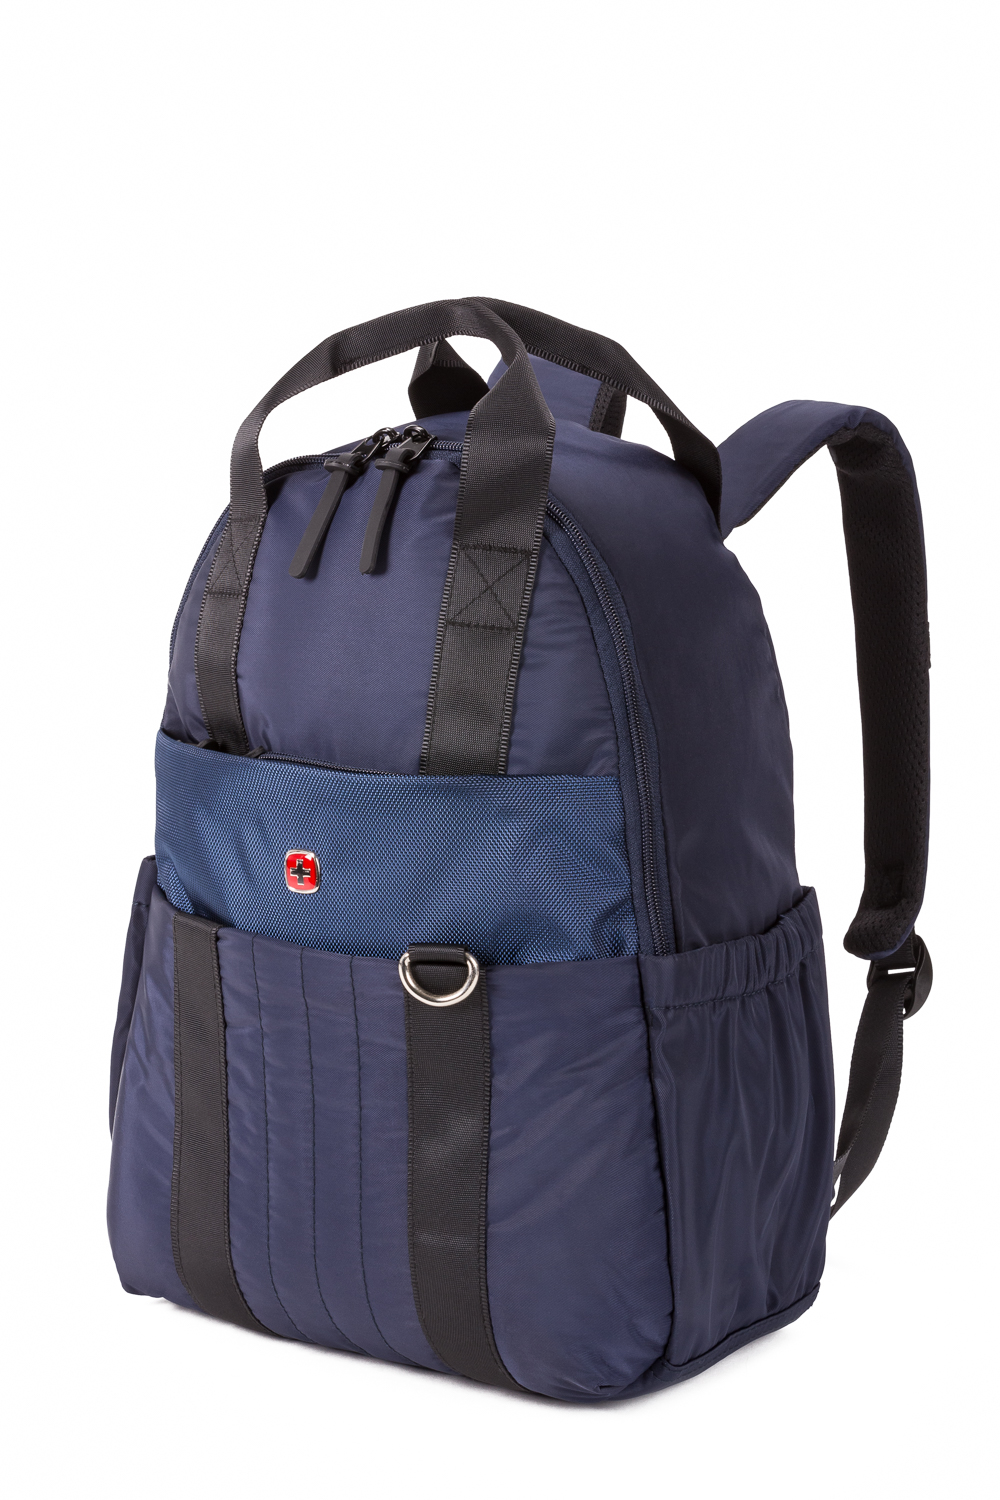 Swissgear 2653 Diaper Backpack - Navy